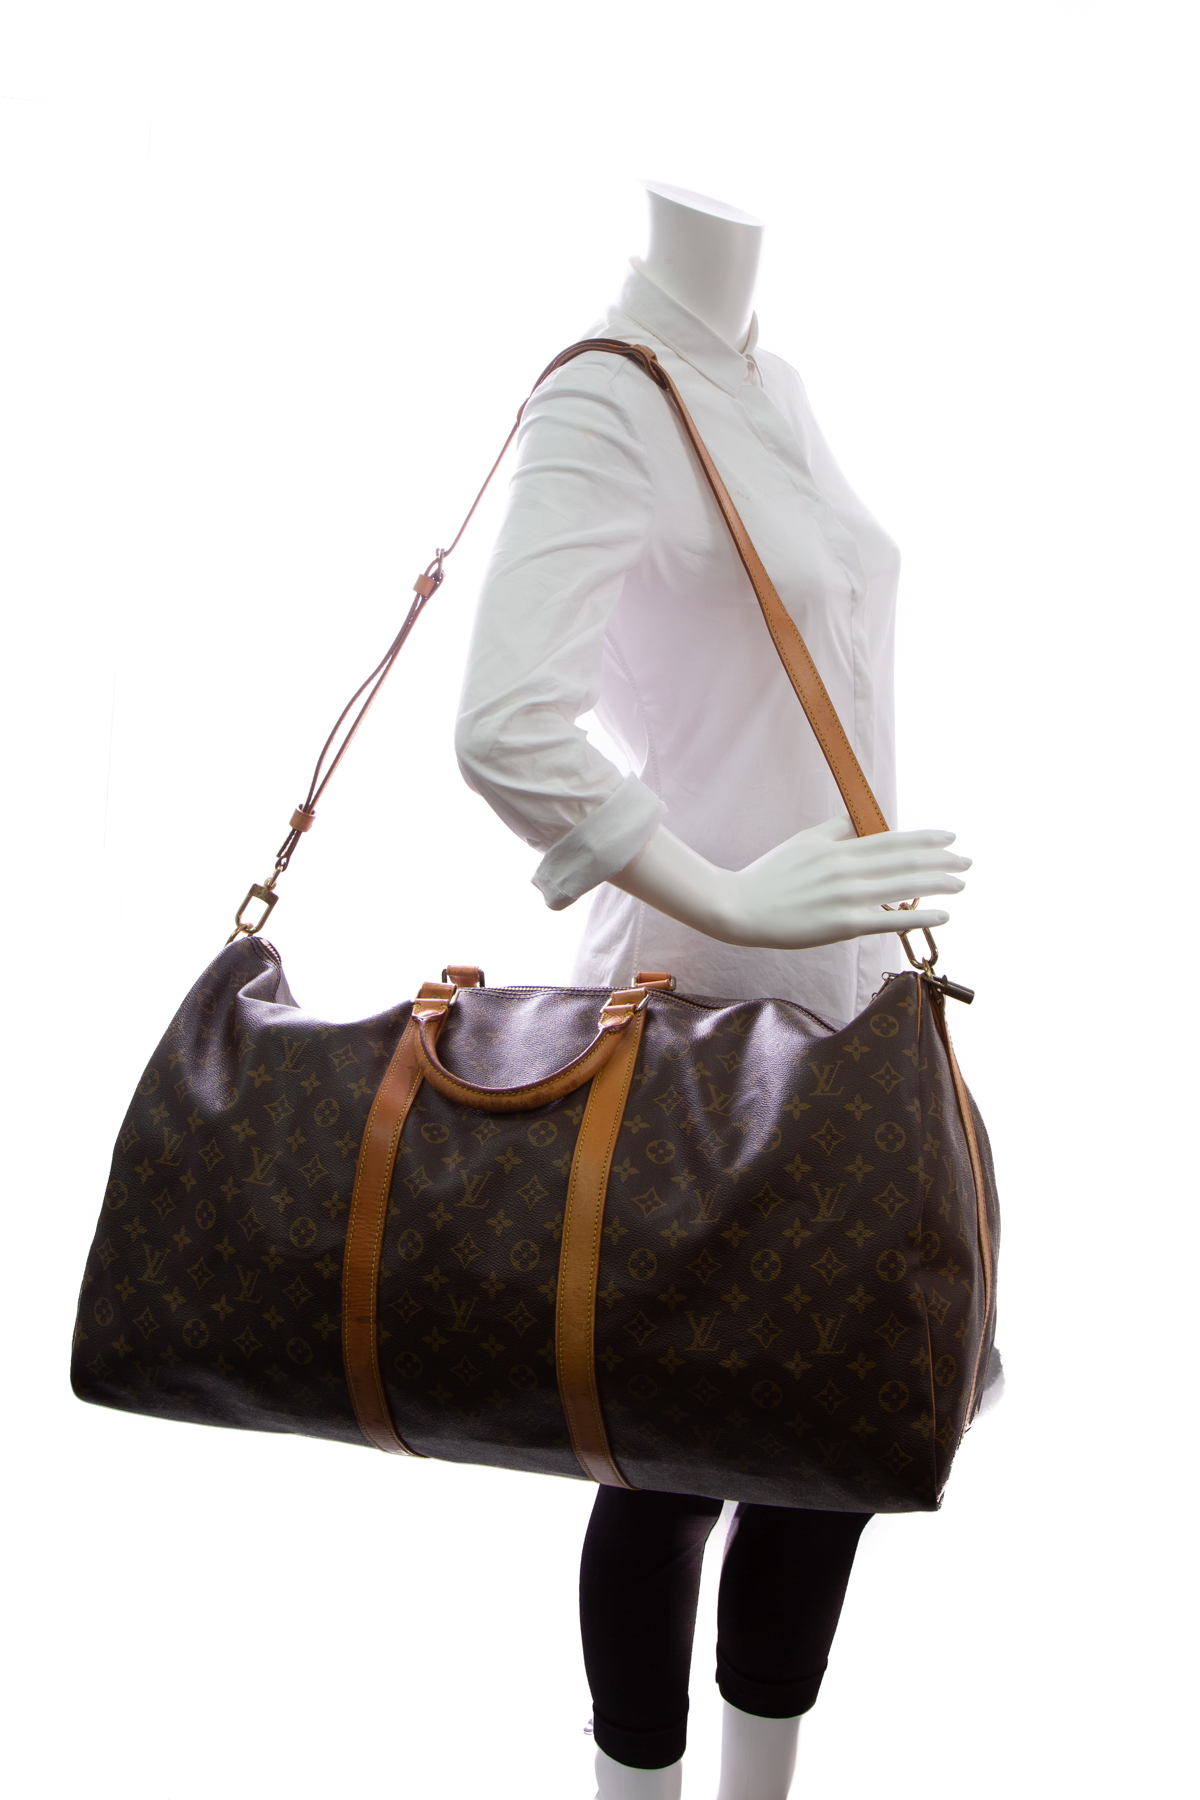 Louis Vuitton Keepall Bandouliere 60 Women's and Men's Boston Bag